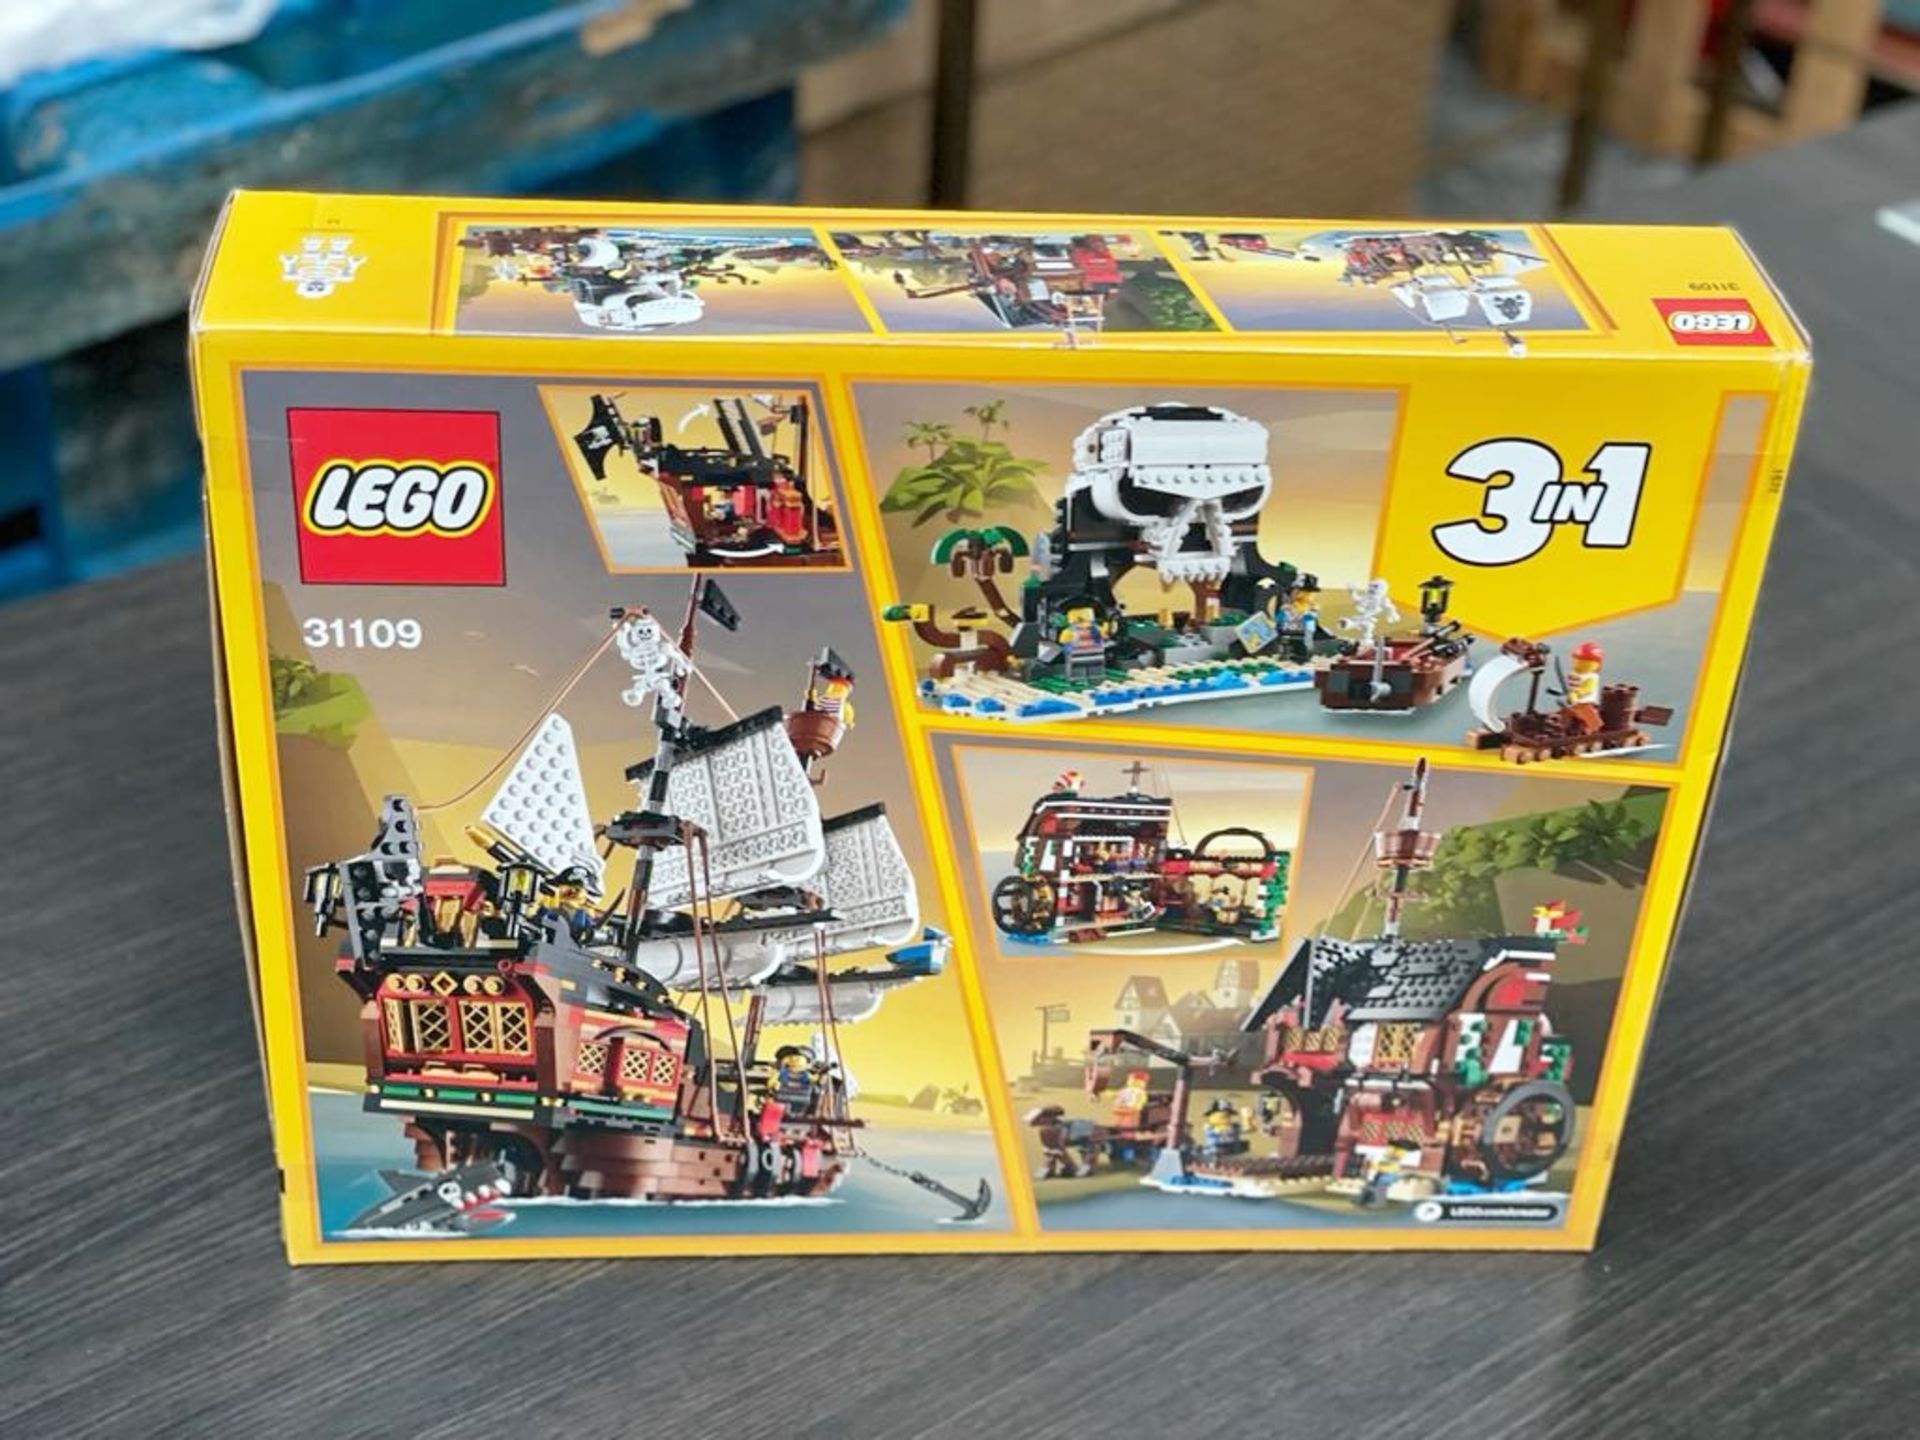 1 x Lego 31109 Creator 3in1 Pirate Ship, Inn & Skull Island Toy Set - Brand New -  Original RRP £ - Image 3 of 3